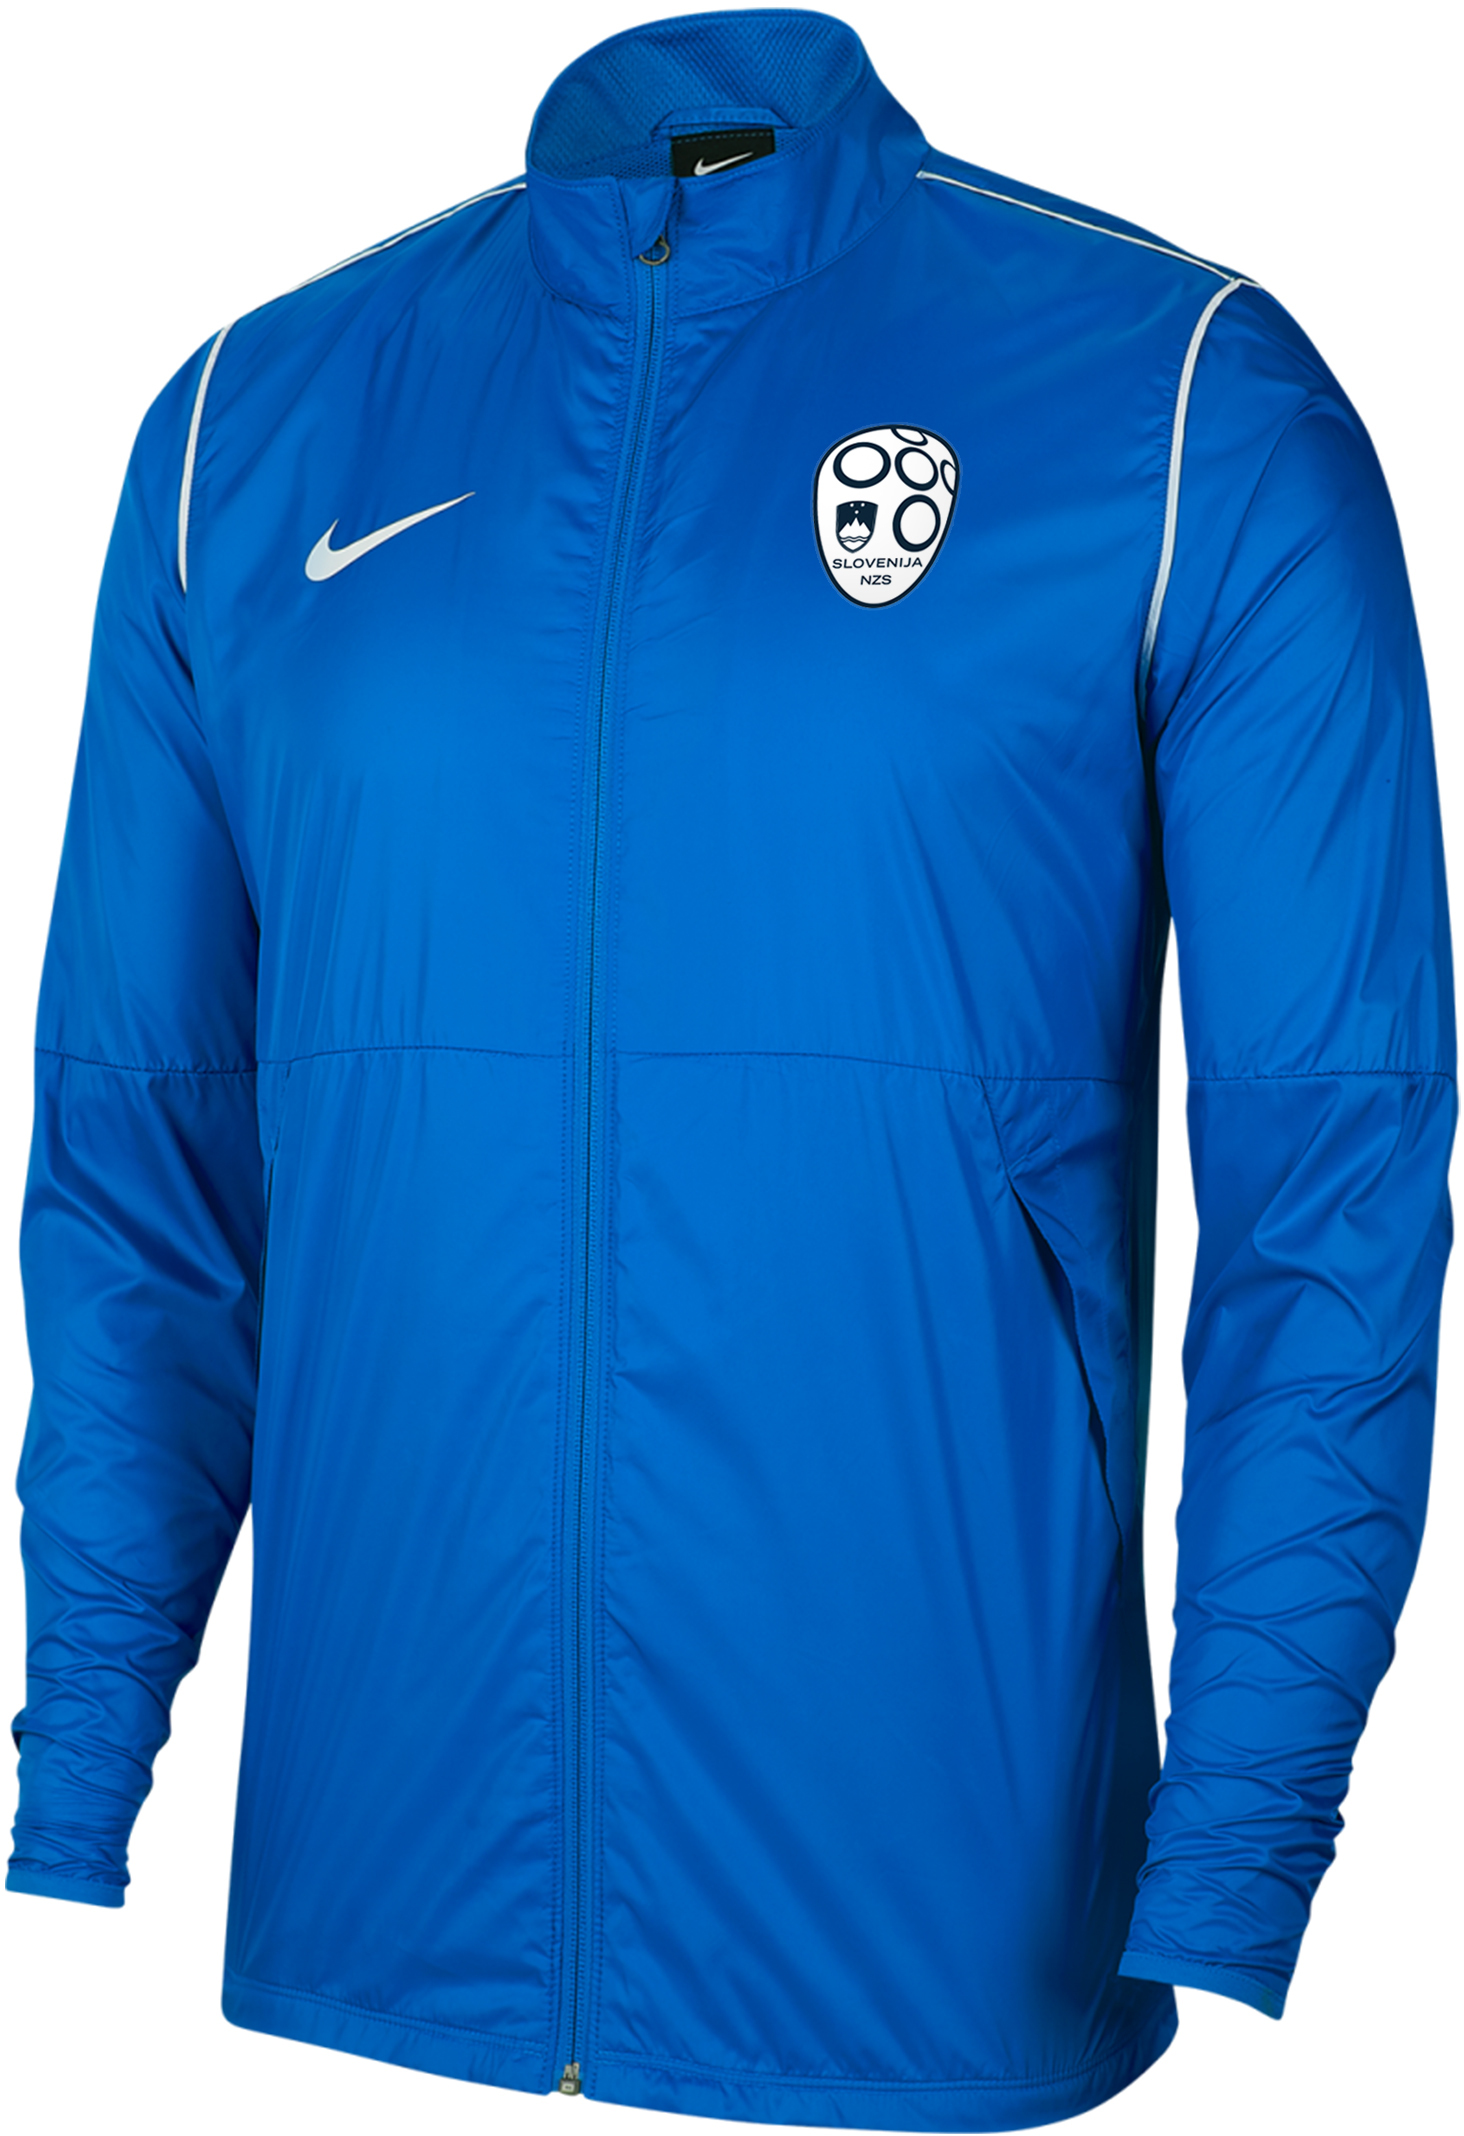 Chaqueta Nike Slovenia Rain Jacket